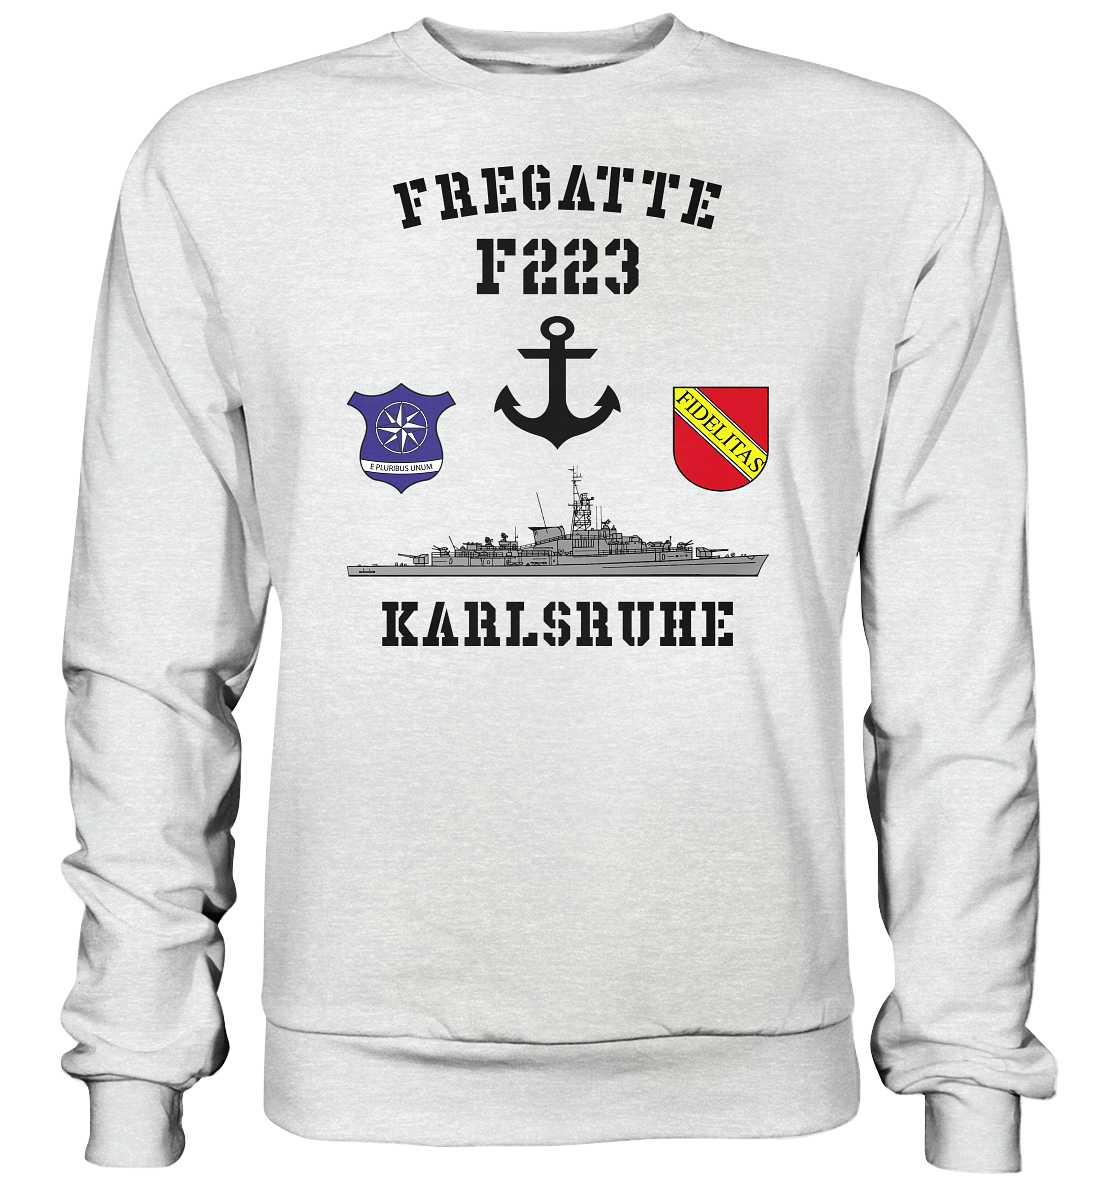 Fregatte F223 KARLSRUHE Anker  - Premium Sweatshirt